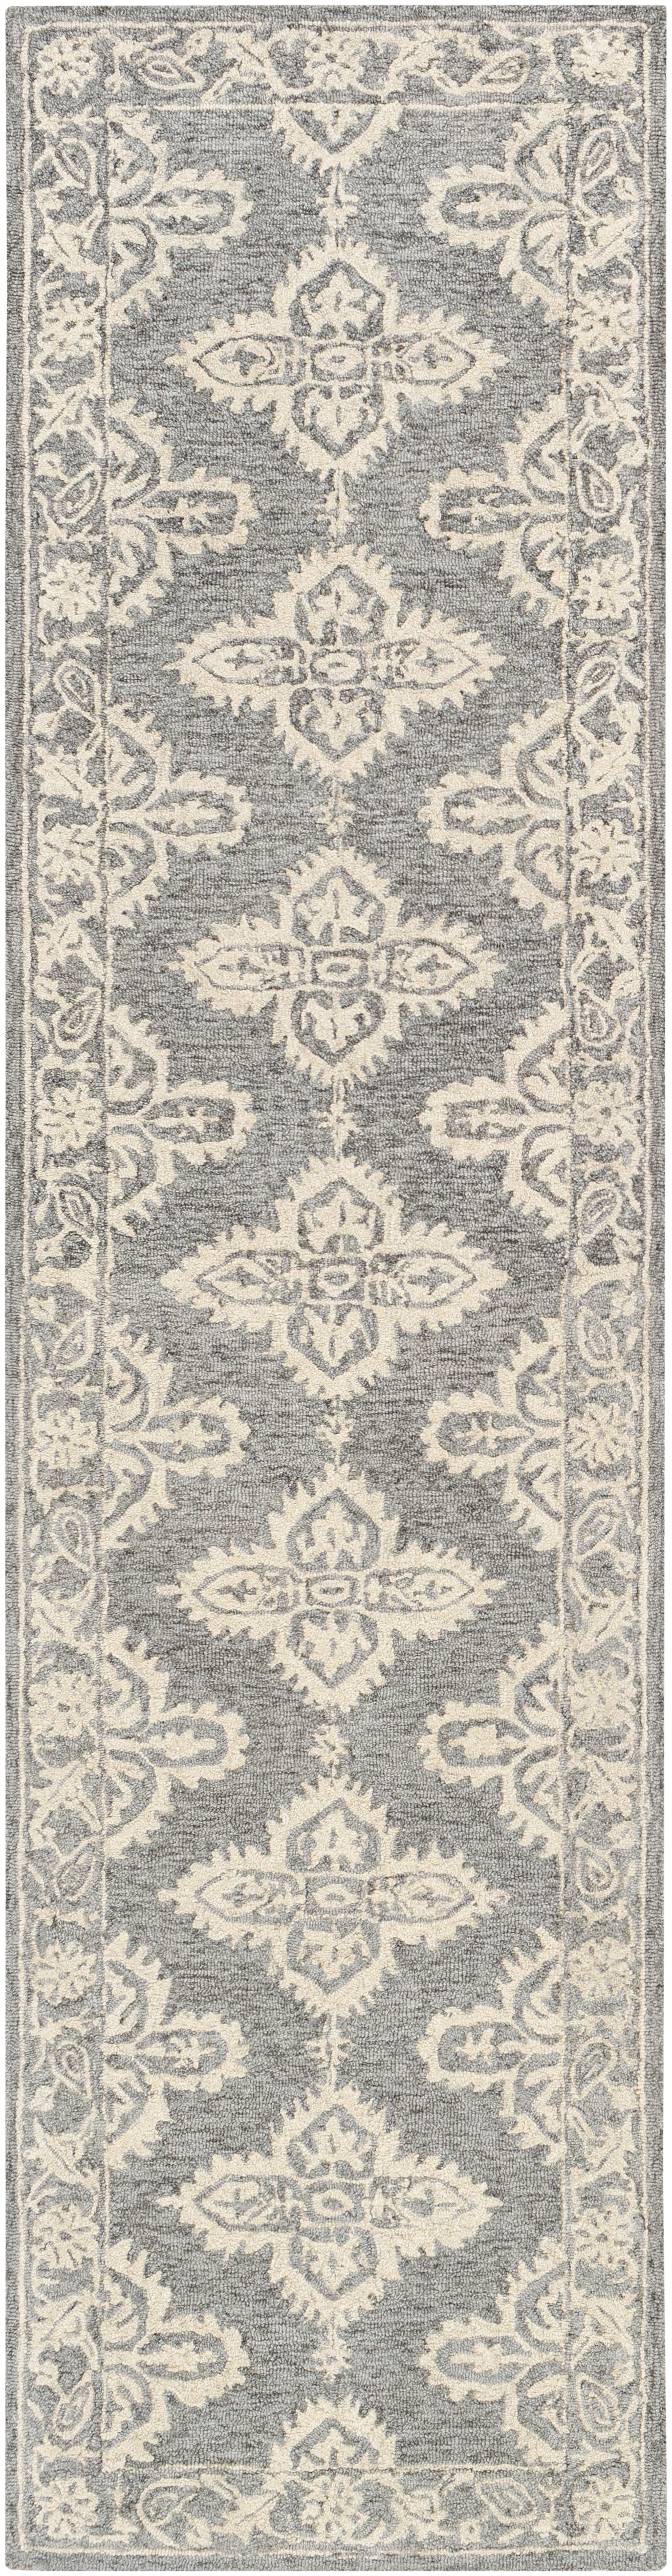 Granada 23802 Hand Tufted Wool Indoor Area Rug by Surya Rugs